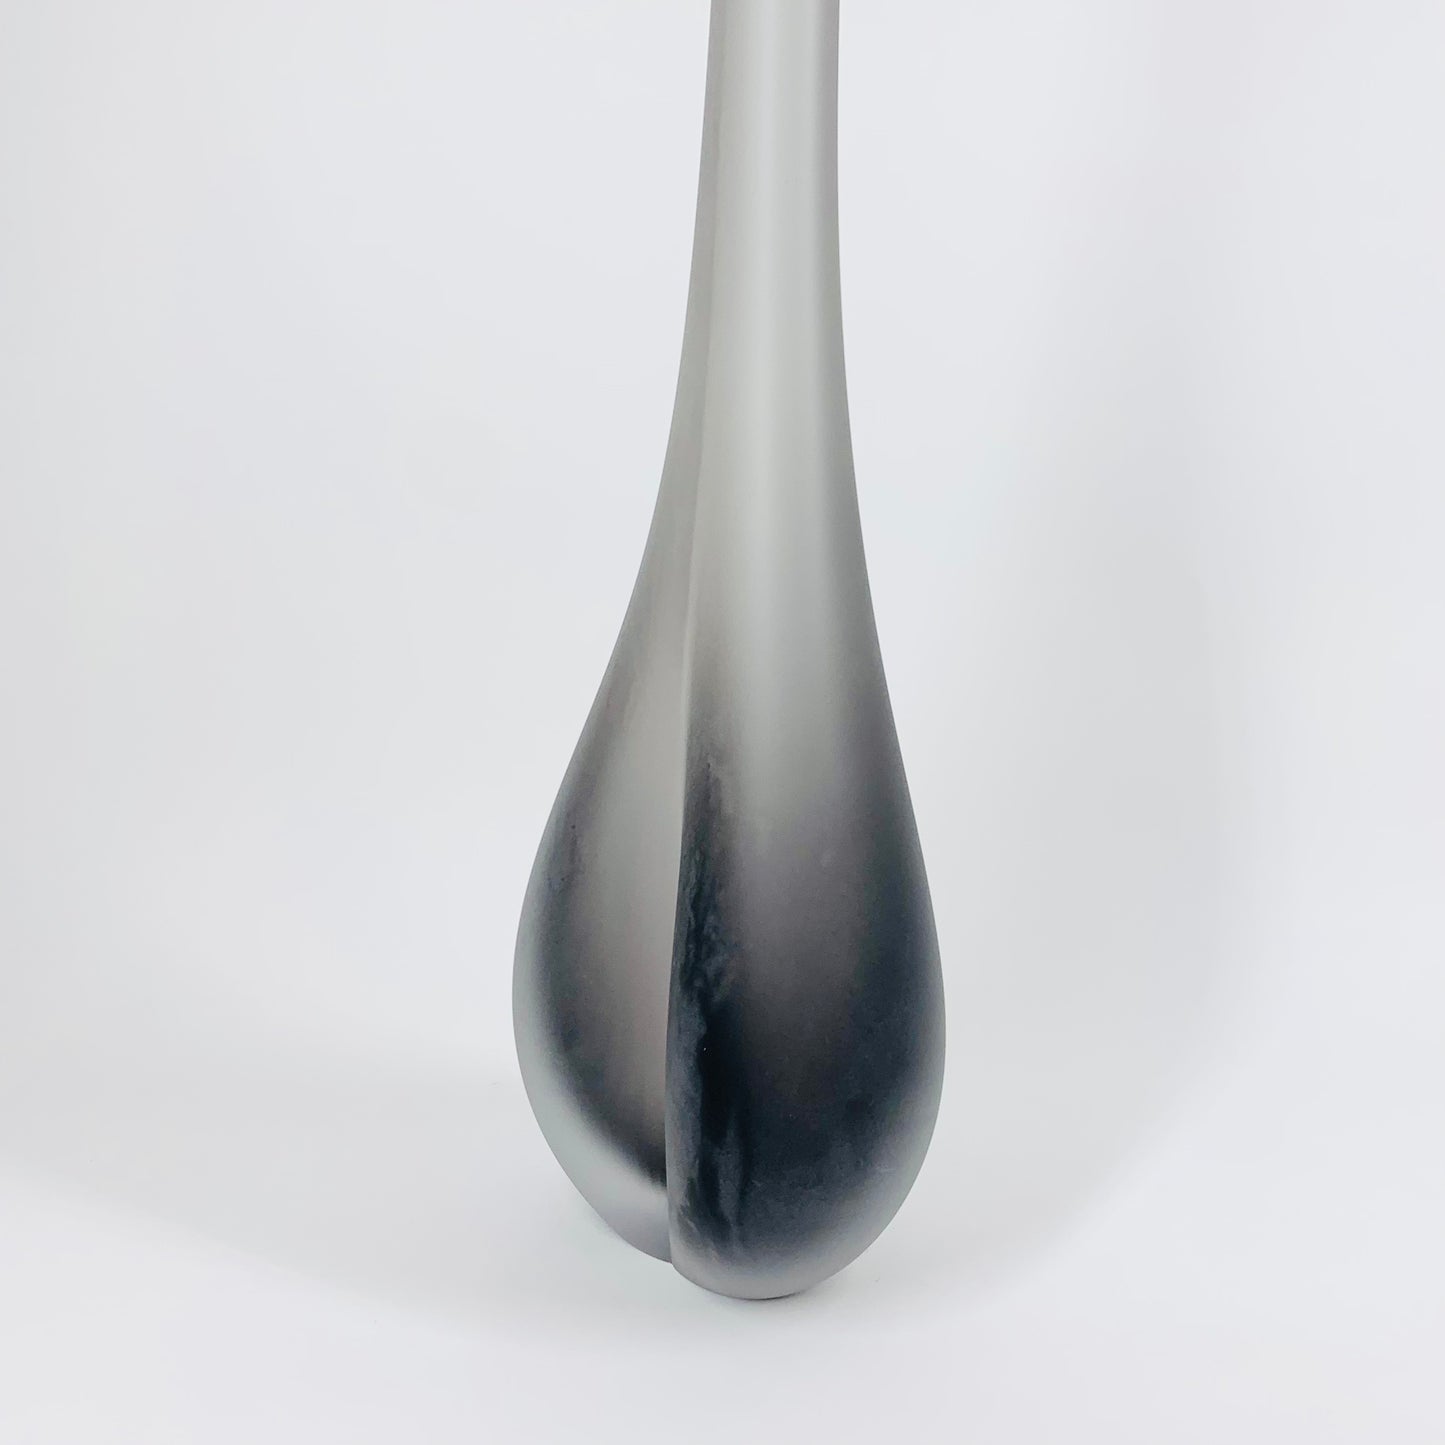 Rare signed Murano satin black art glass vase